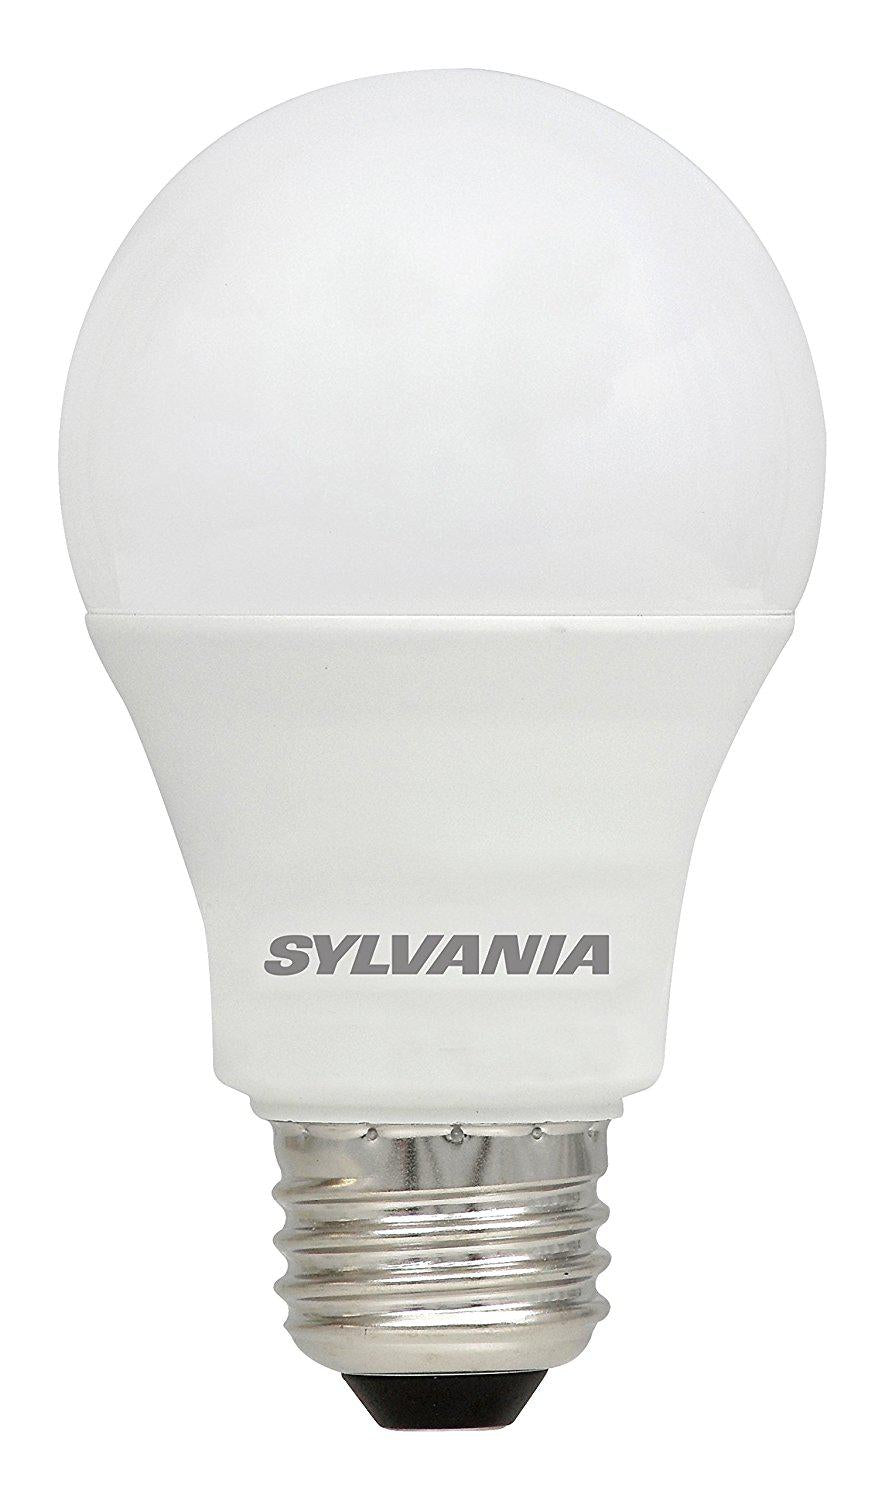 Sylvania Home Lighting 78102 A19 Sylvania, 100W Equivalent, LED Light Bulb Lamp, 4 Pack, Efficient 14W 3500K, Bright White.